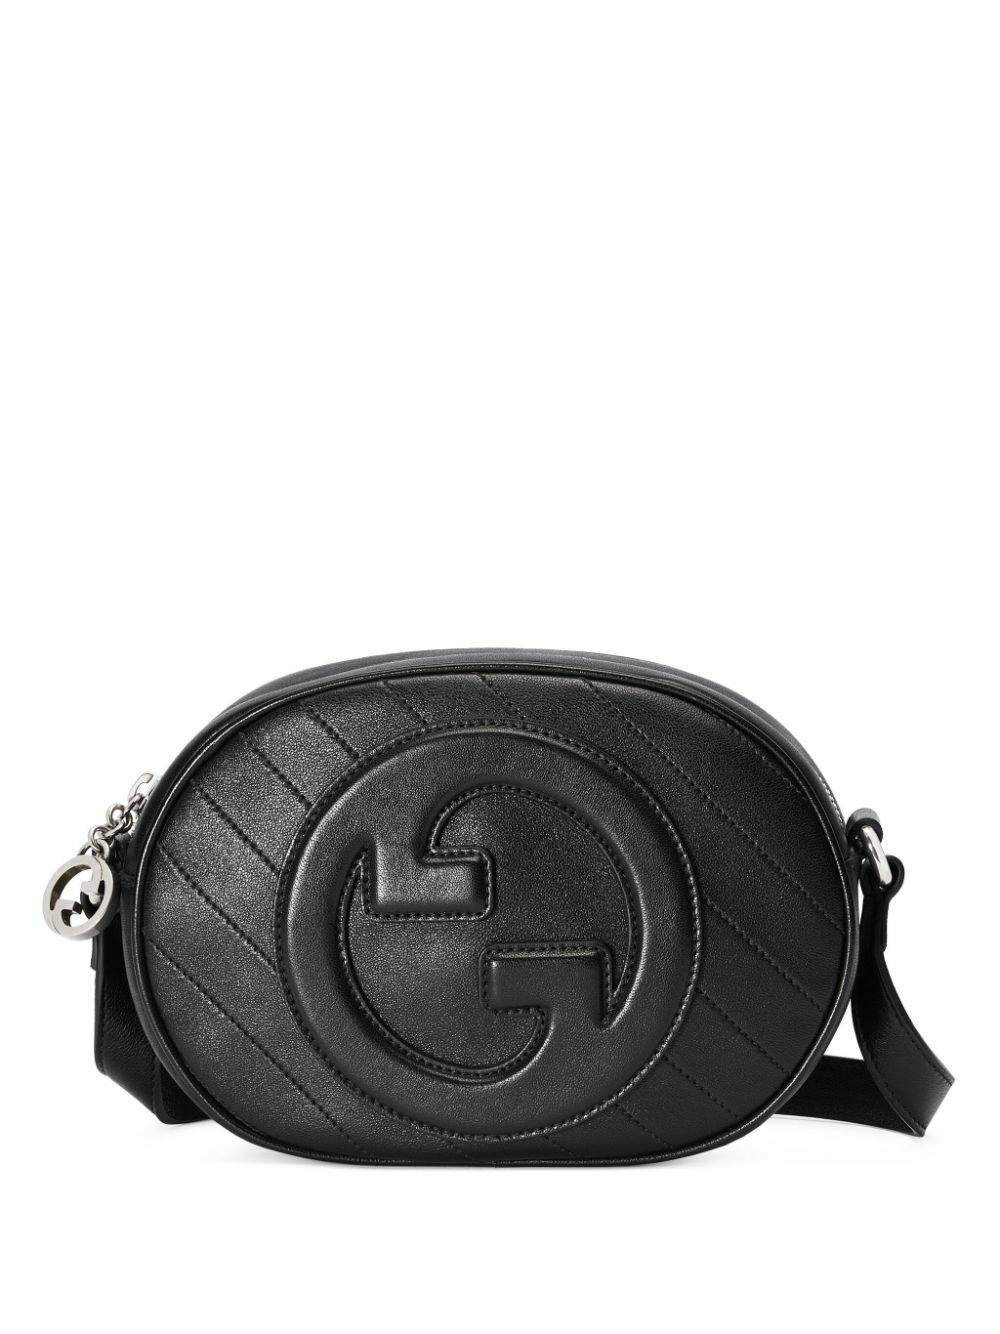 GUCCI - Blondie Mini Leather Crossbody Bag Gucci